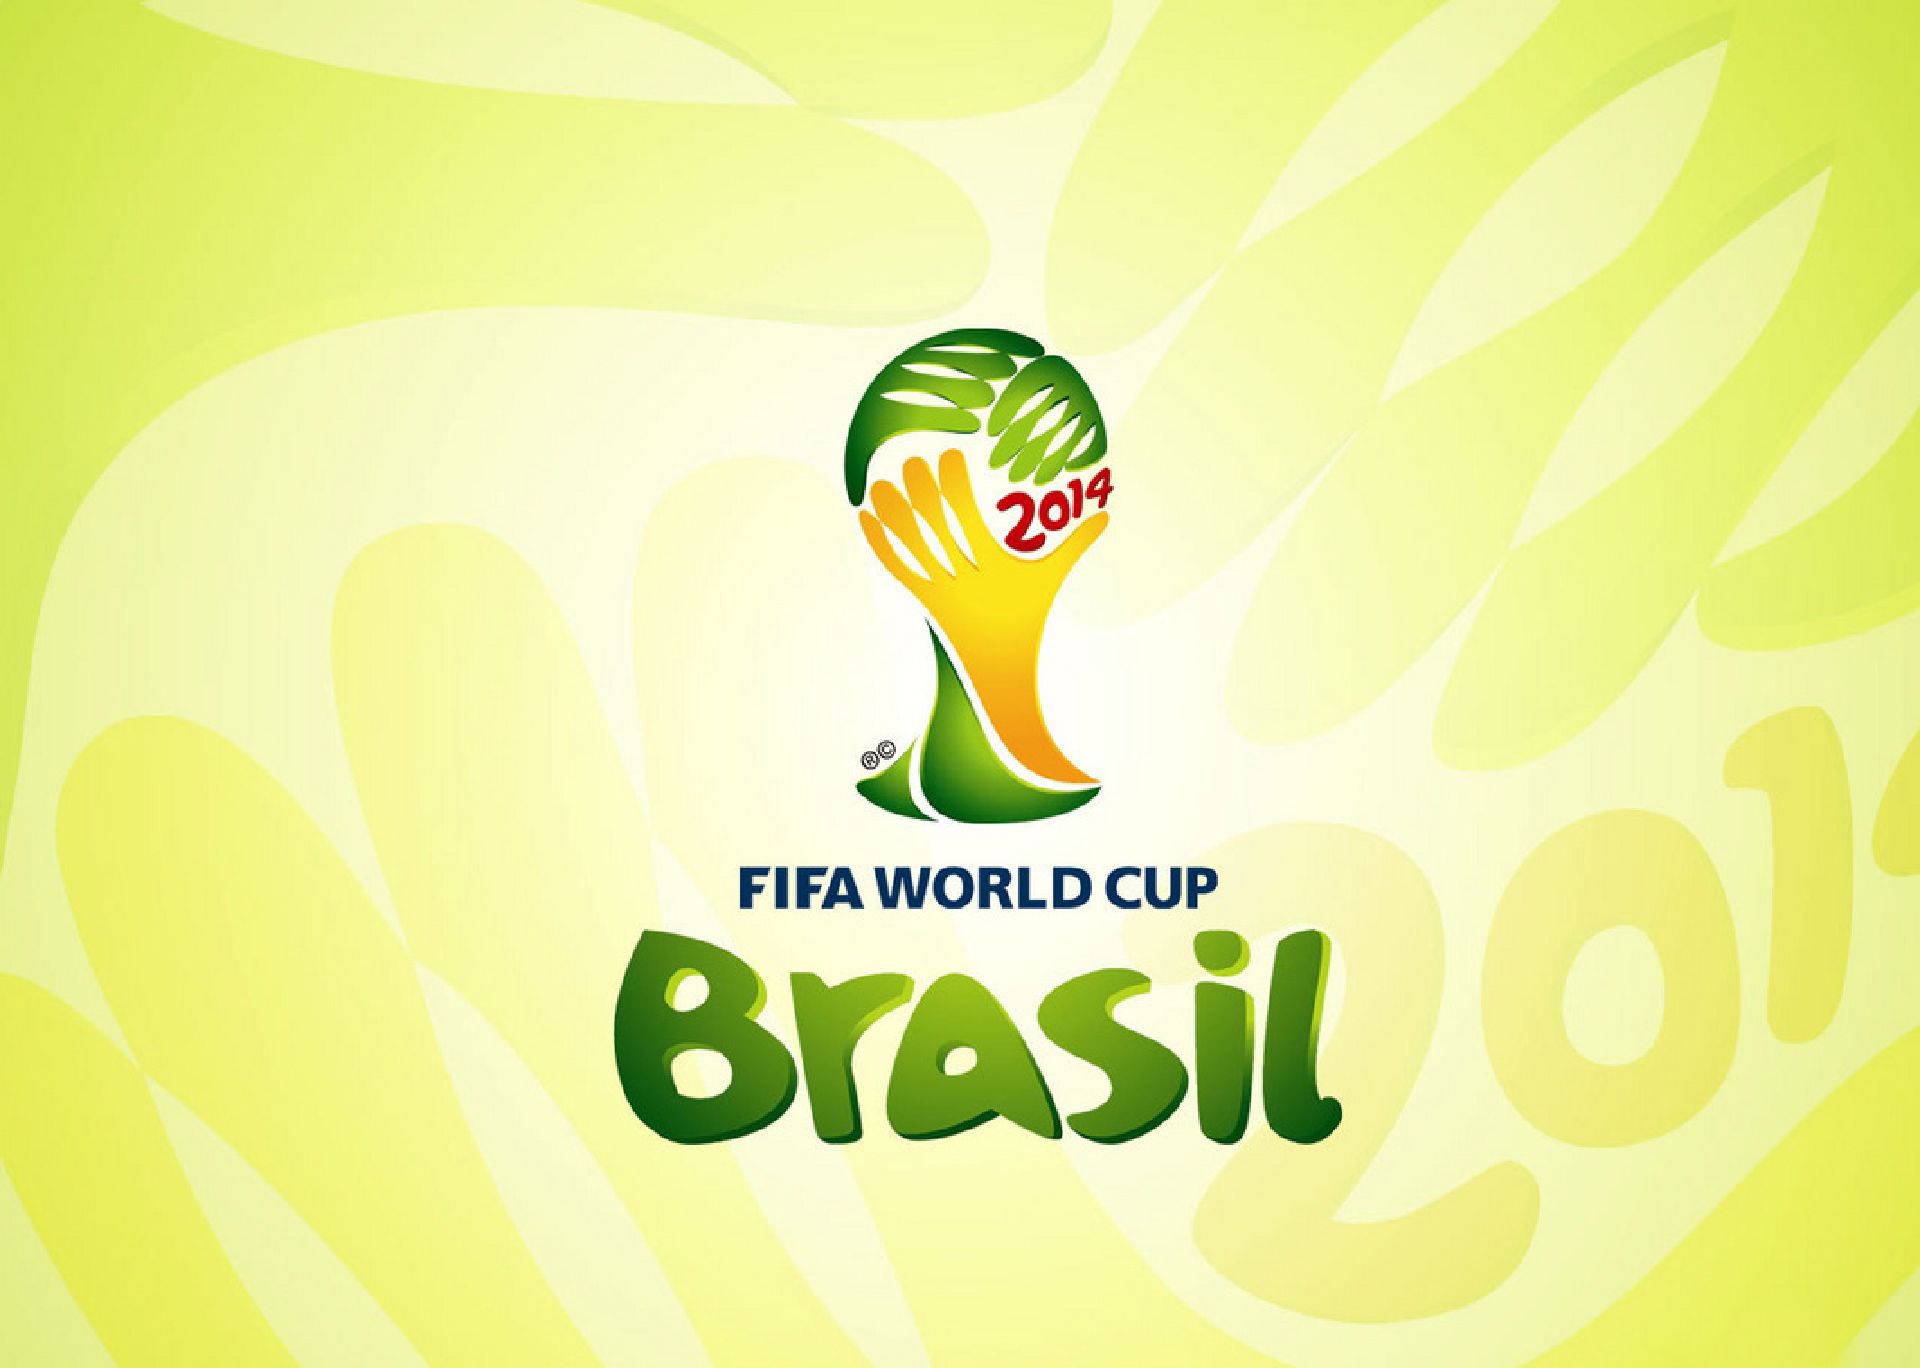 FIFA World Cup 2014